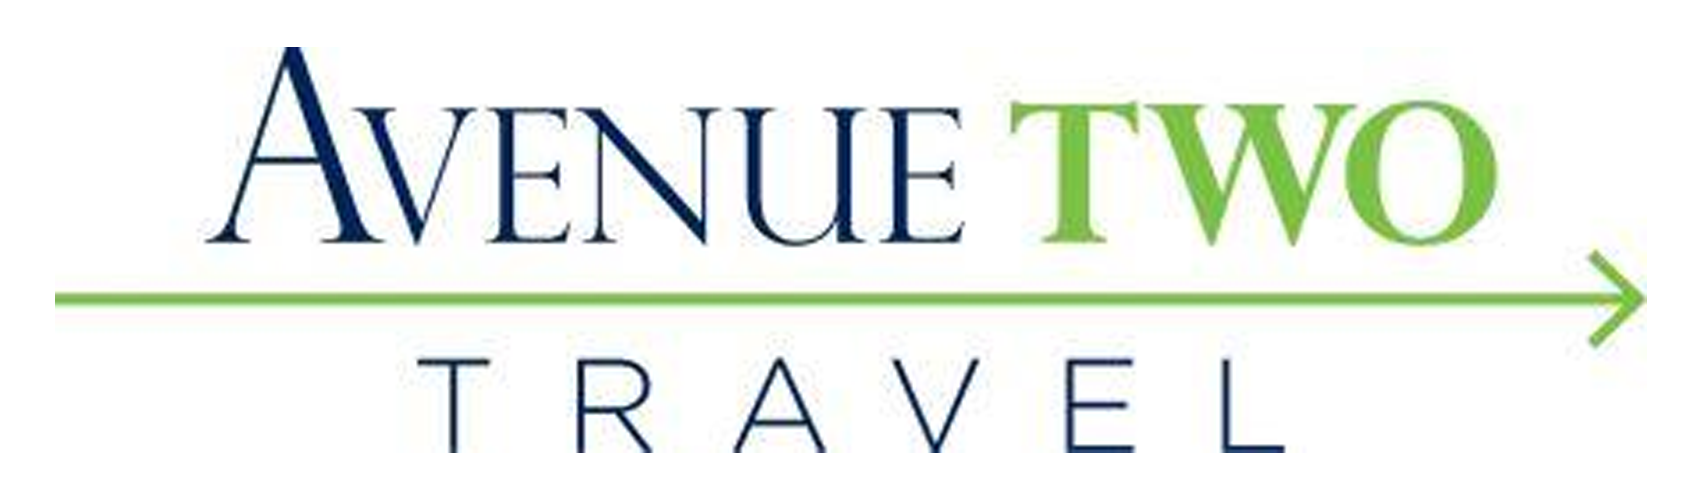 avenue two travel logo